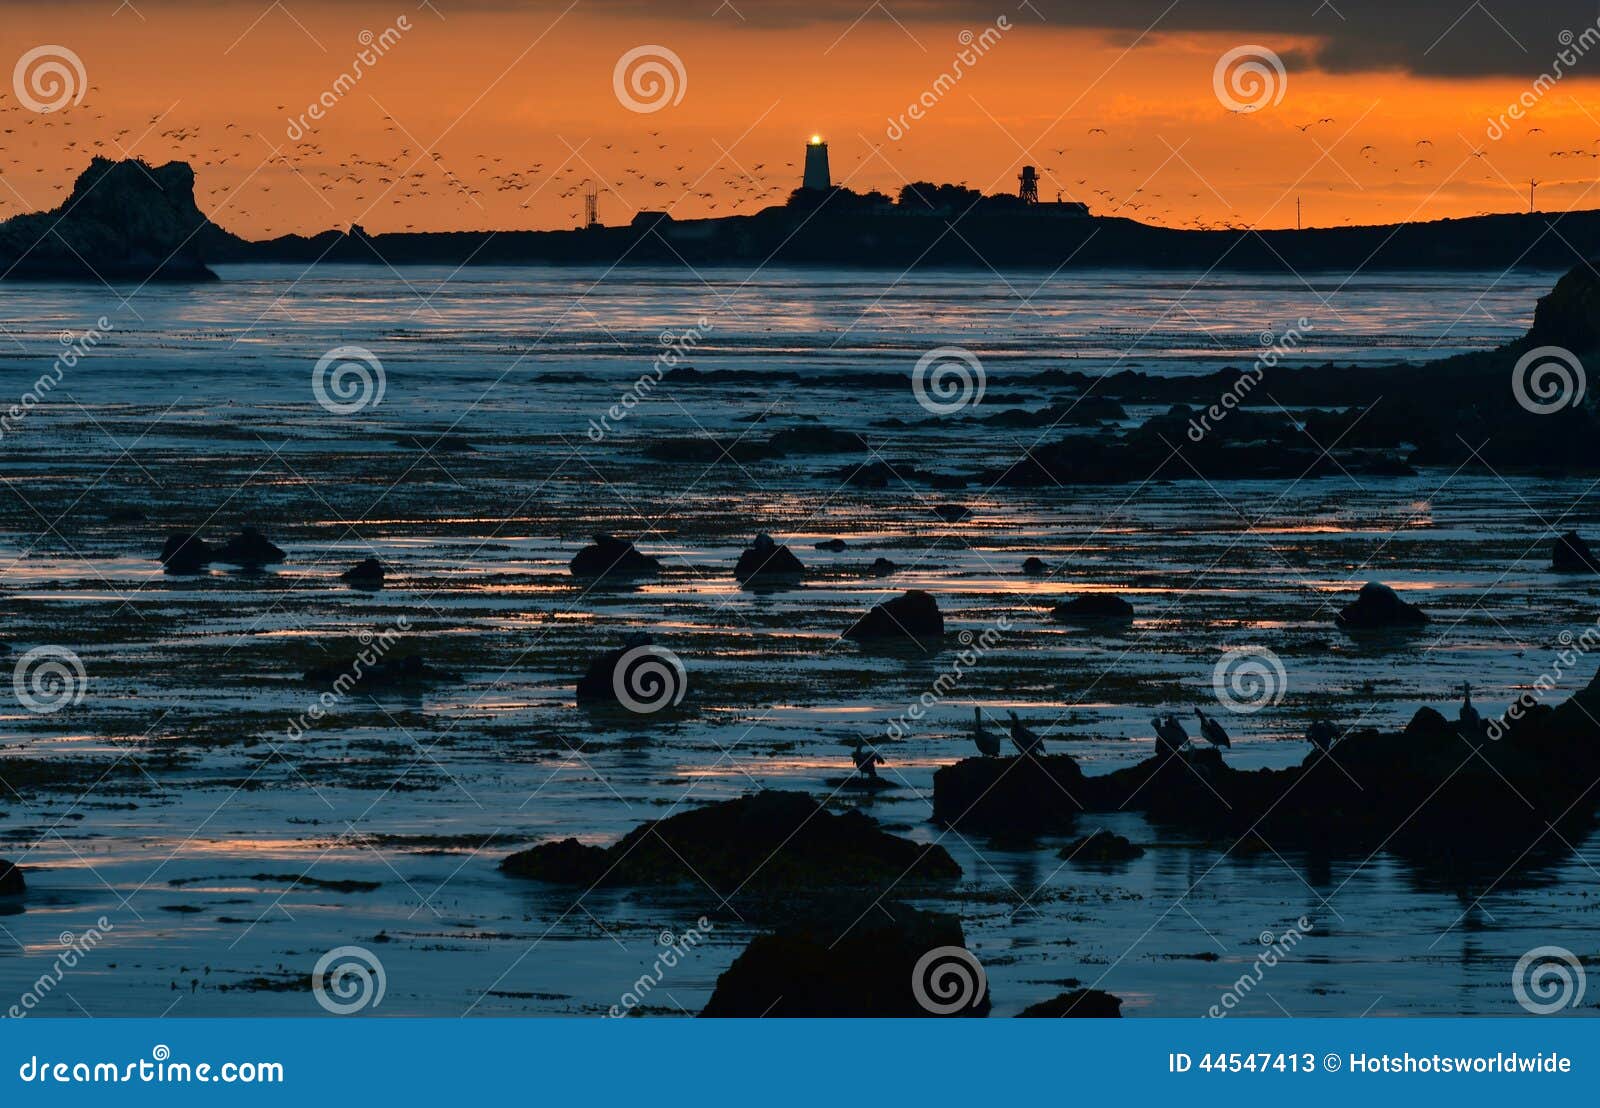 sunset over piedras blancas lighthouse and big sur rugged coastline